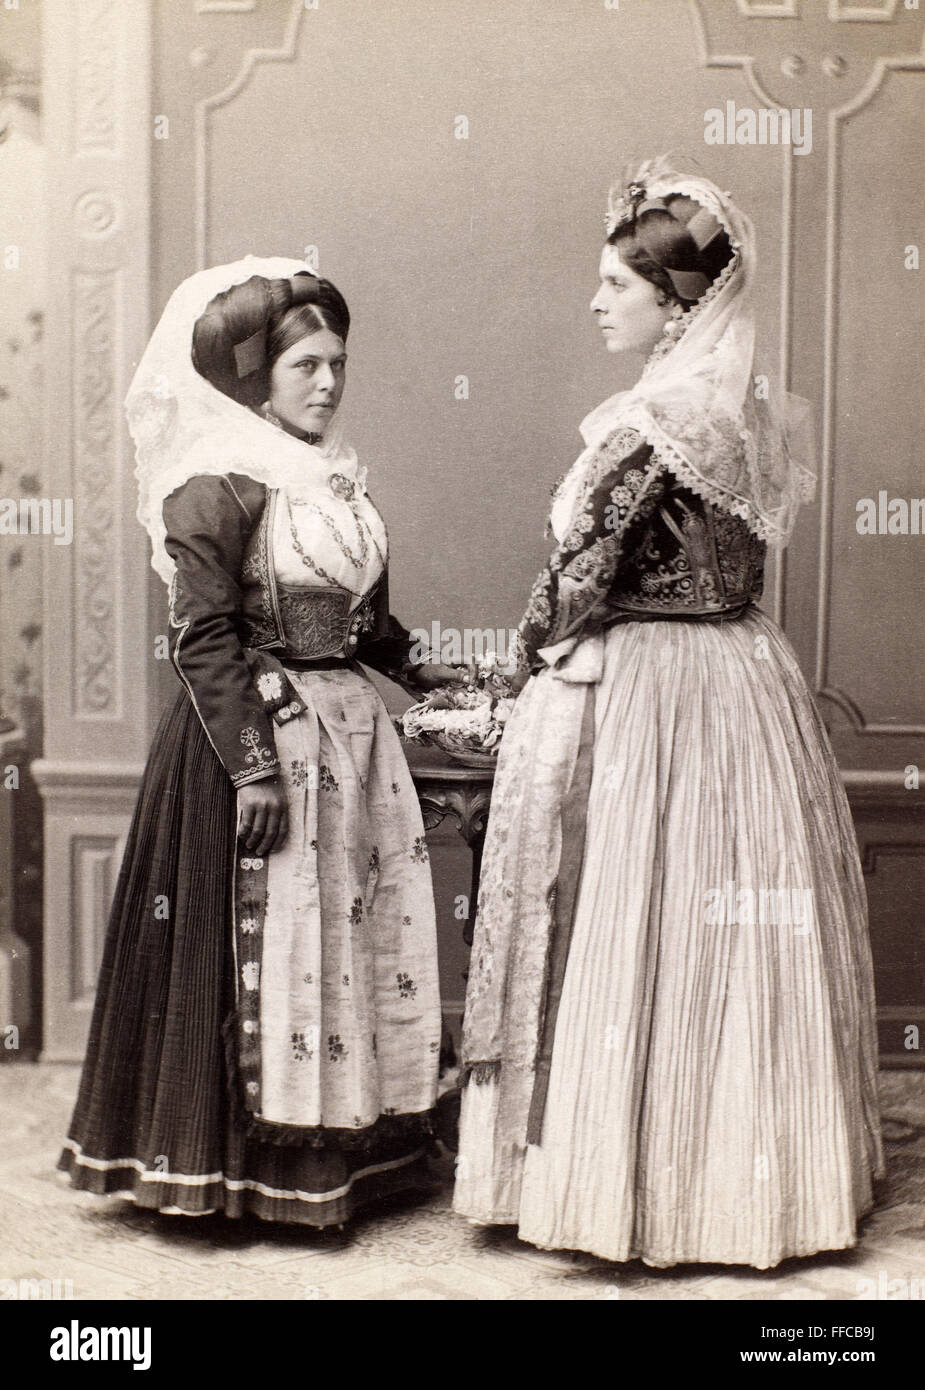 YUGOSLAVIA: COSTUMES. /nWomen wearing traditional Yugoslavian costumes, c1900. Stock Photo